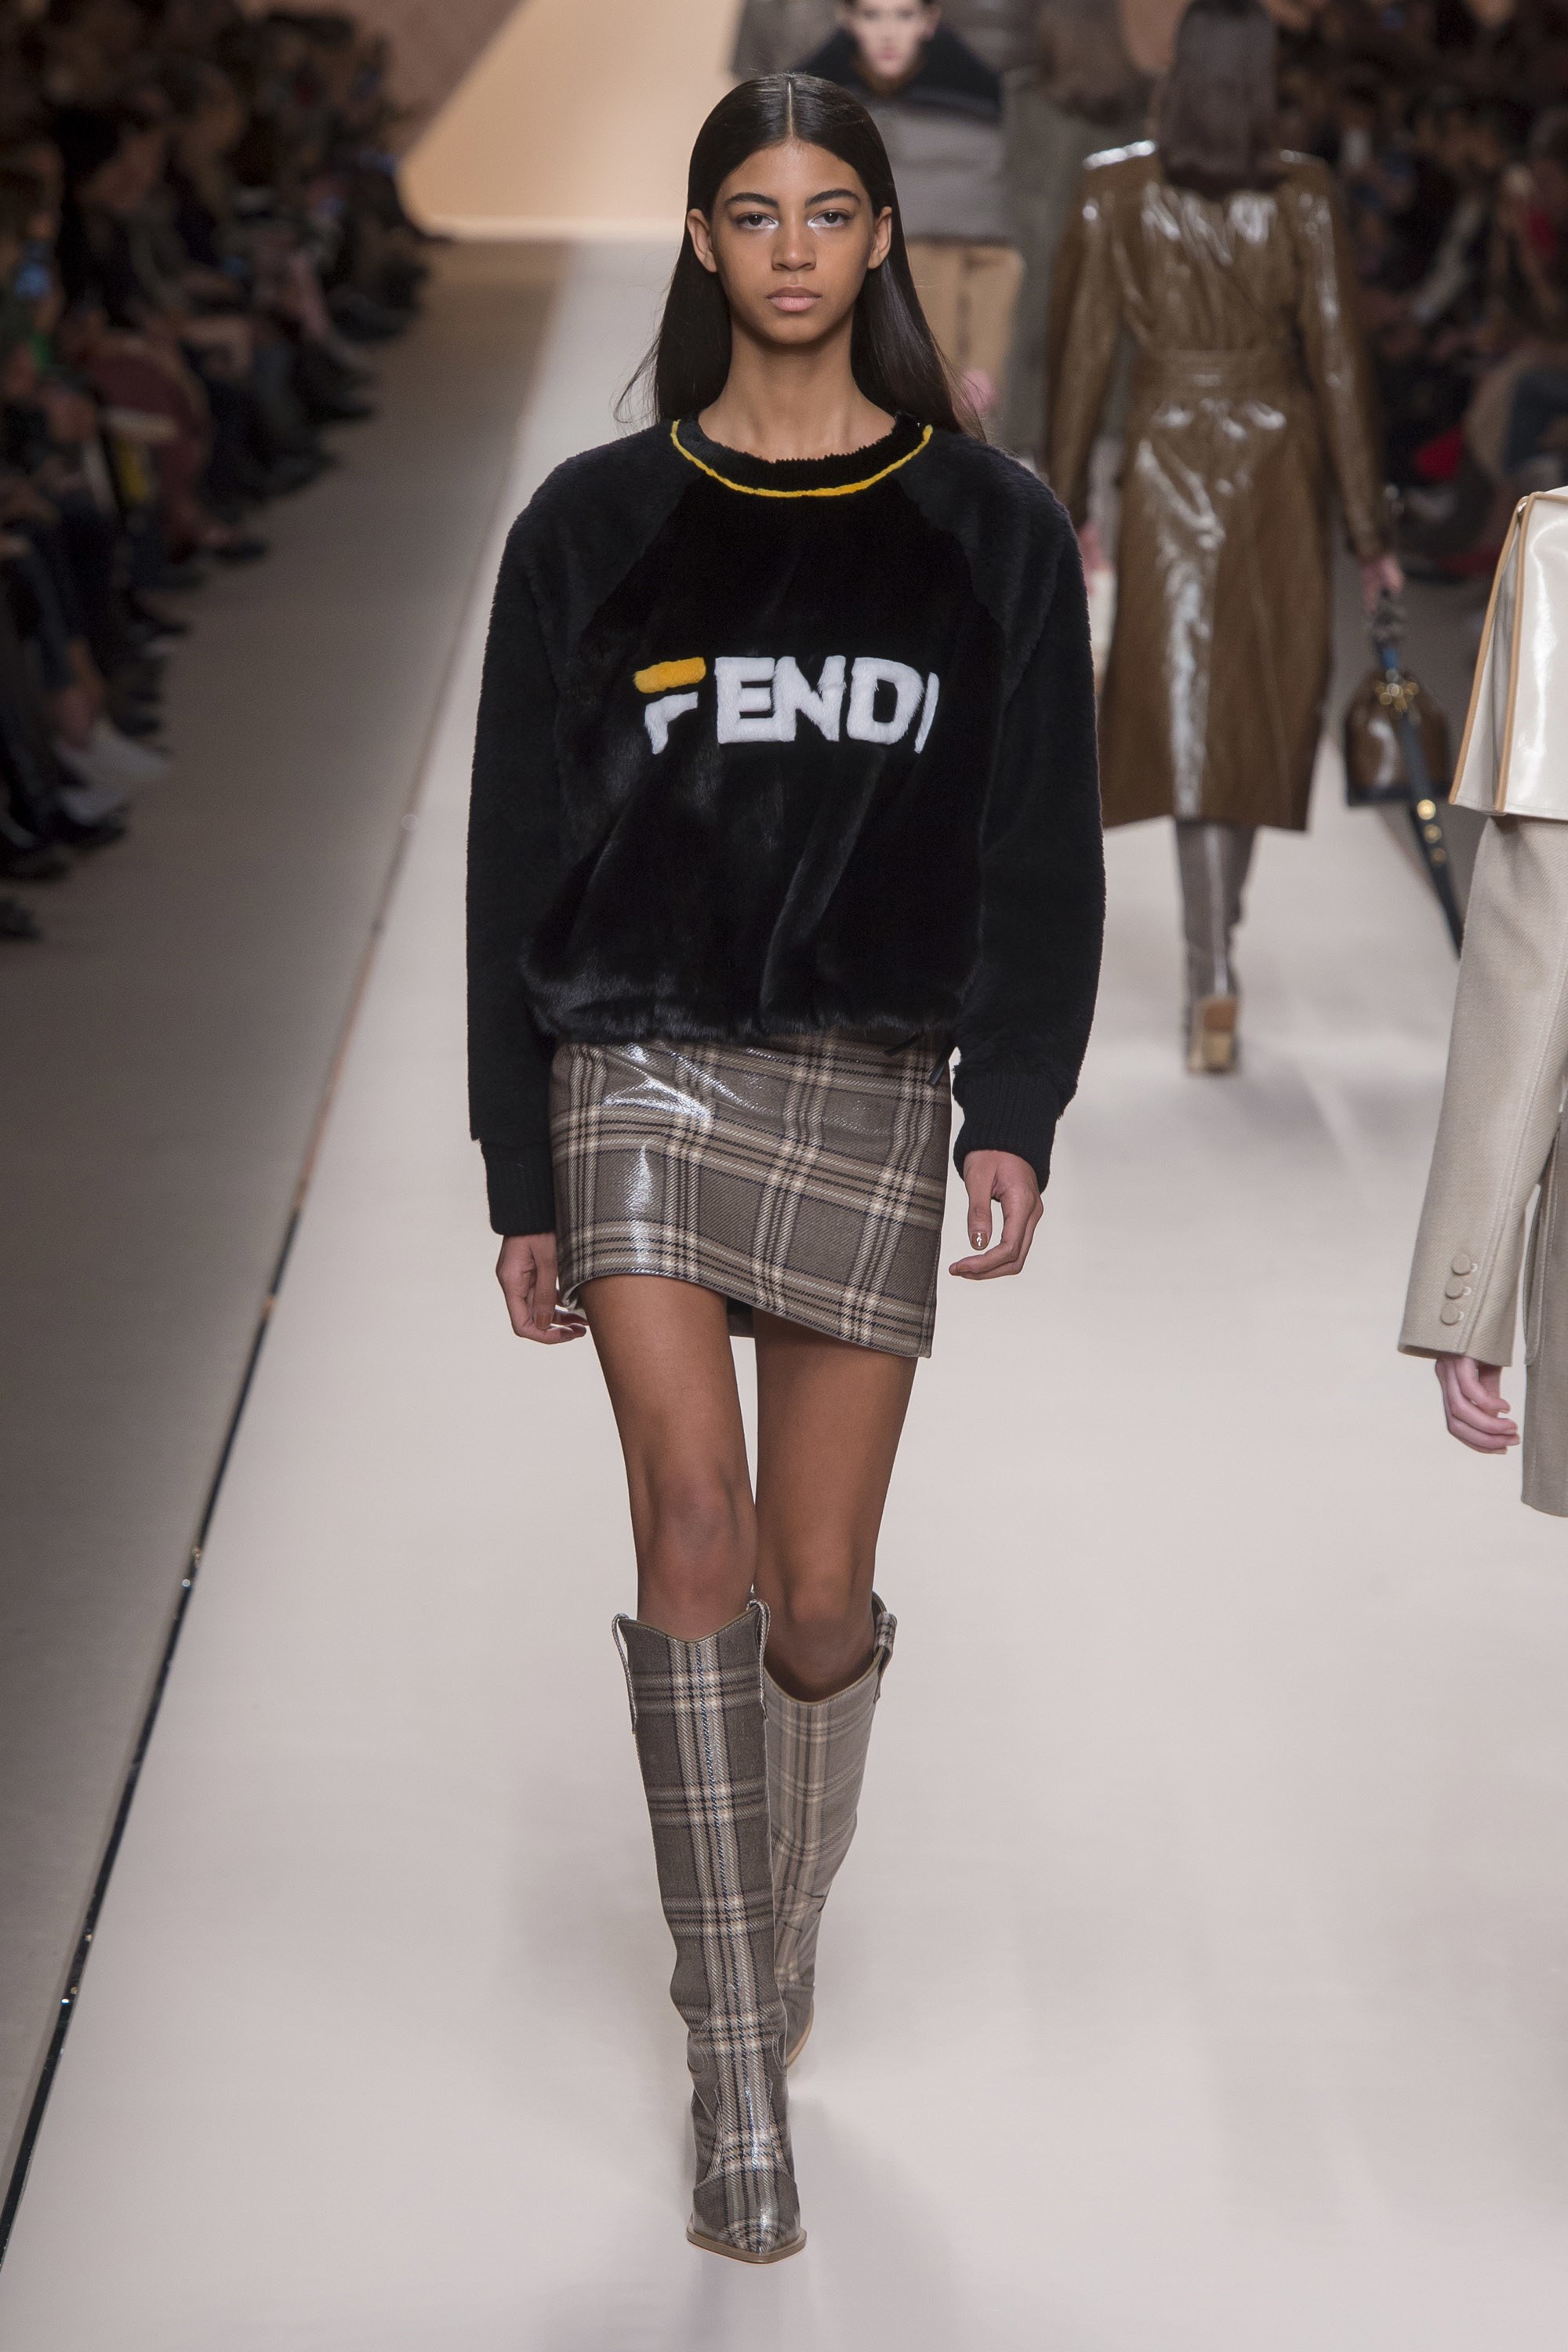 Fendi FILA Fall/Winter 2018 Milan Fashion Week Collaboration Artist Hey Reilly Karl Lagerfeld